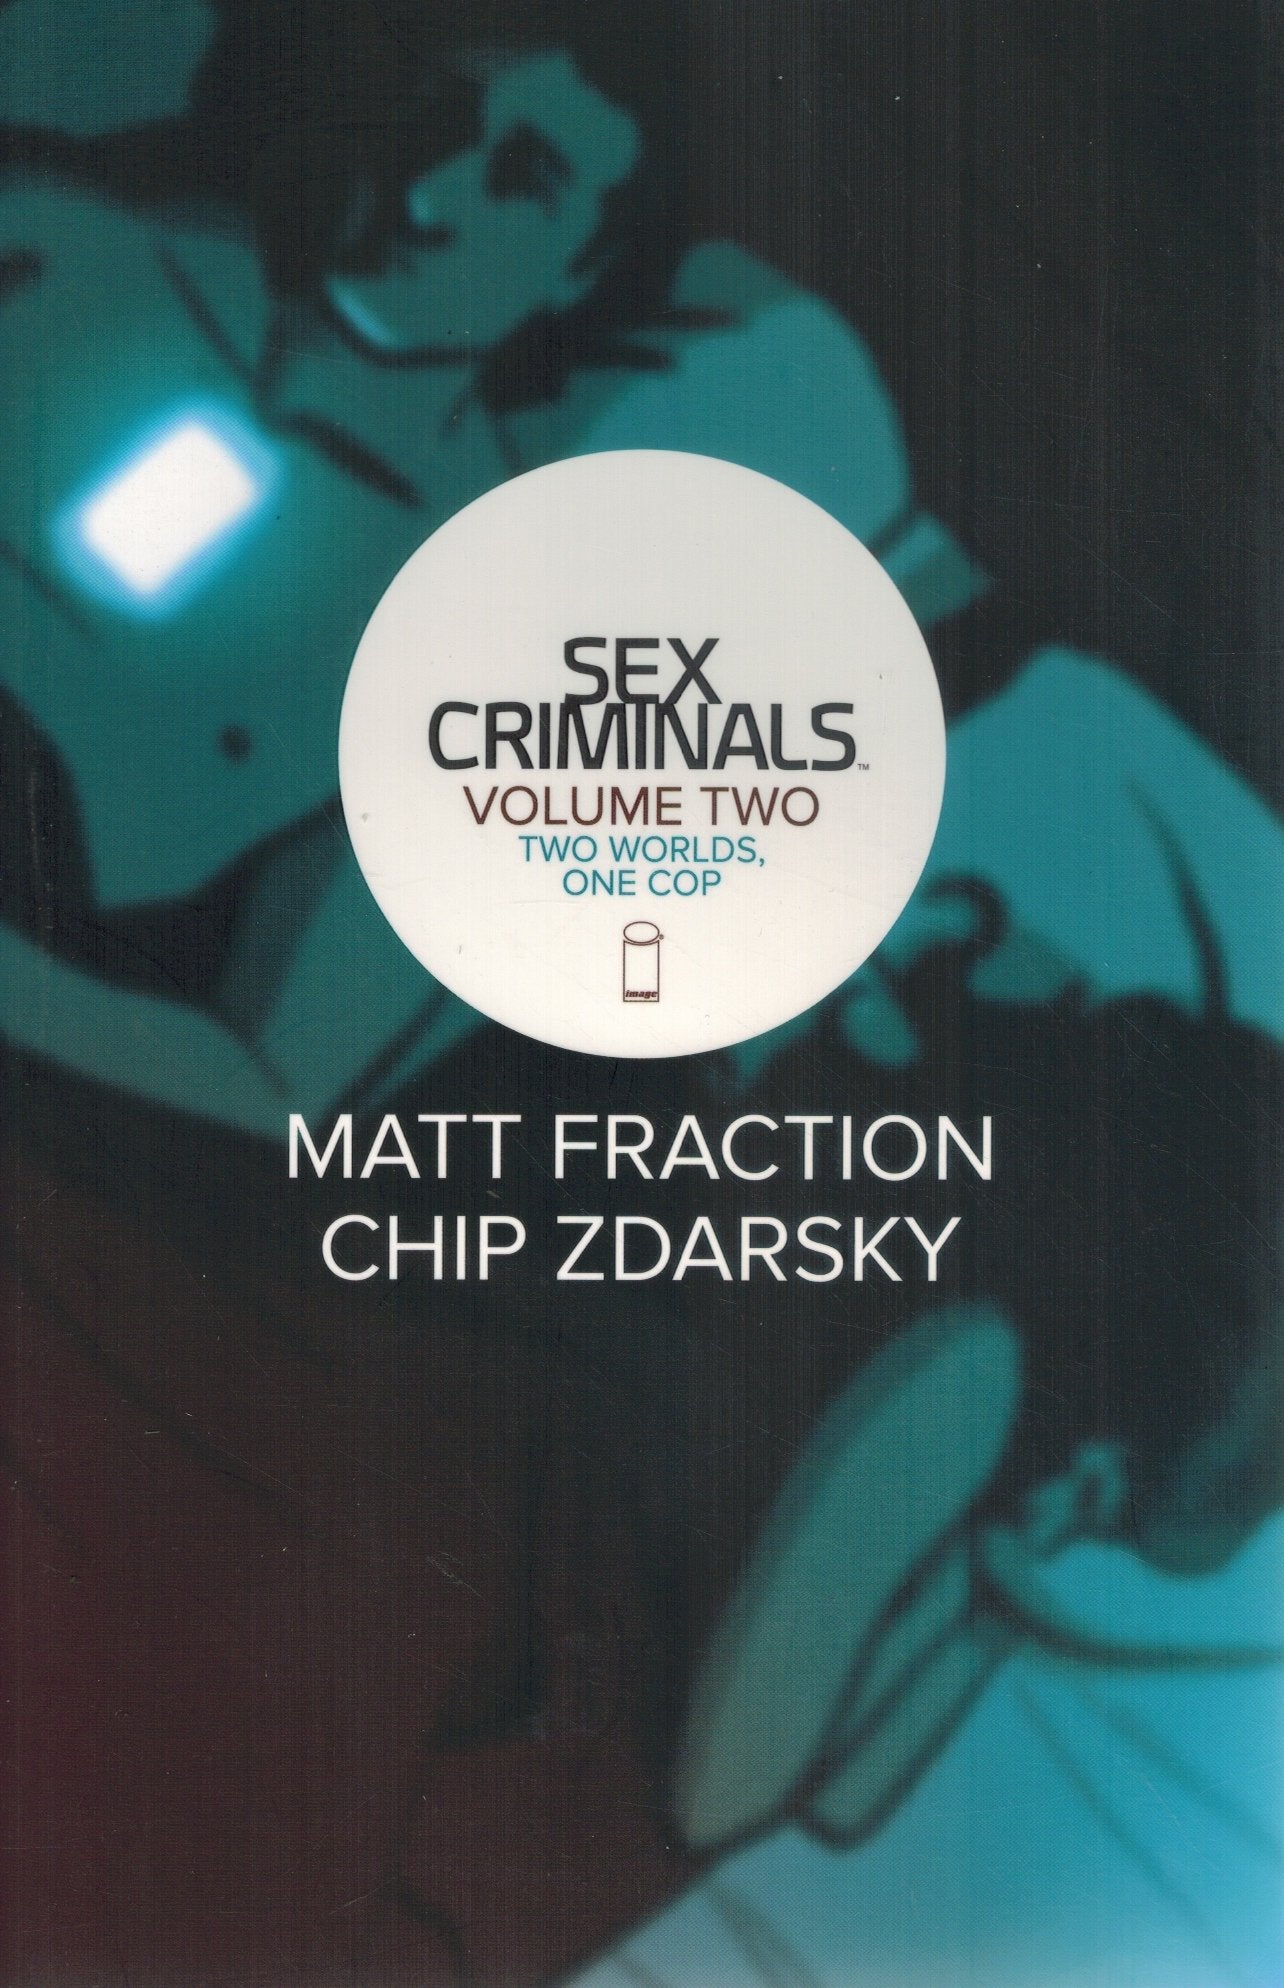 SEX CRIMINALS, VOL. 2  Two Worlds, One Cop  by Fraction, Matt & Chip Zdarsky